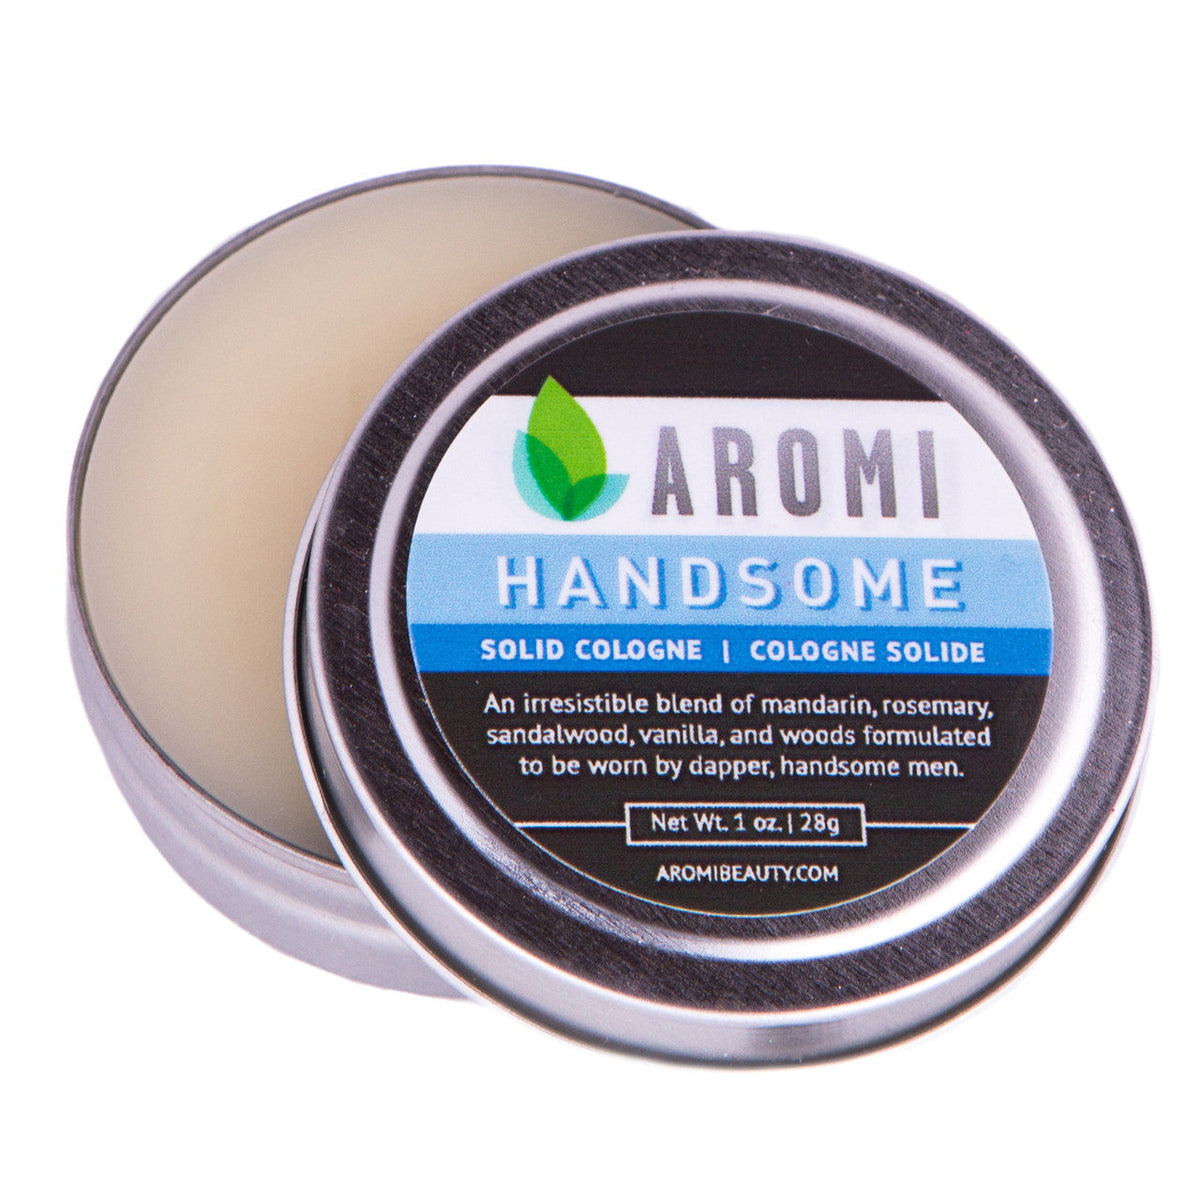 Aromi Handsome Sample